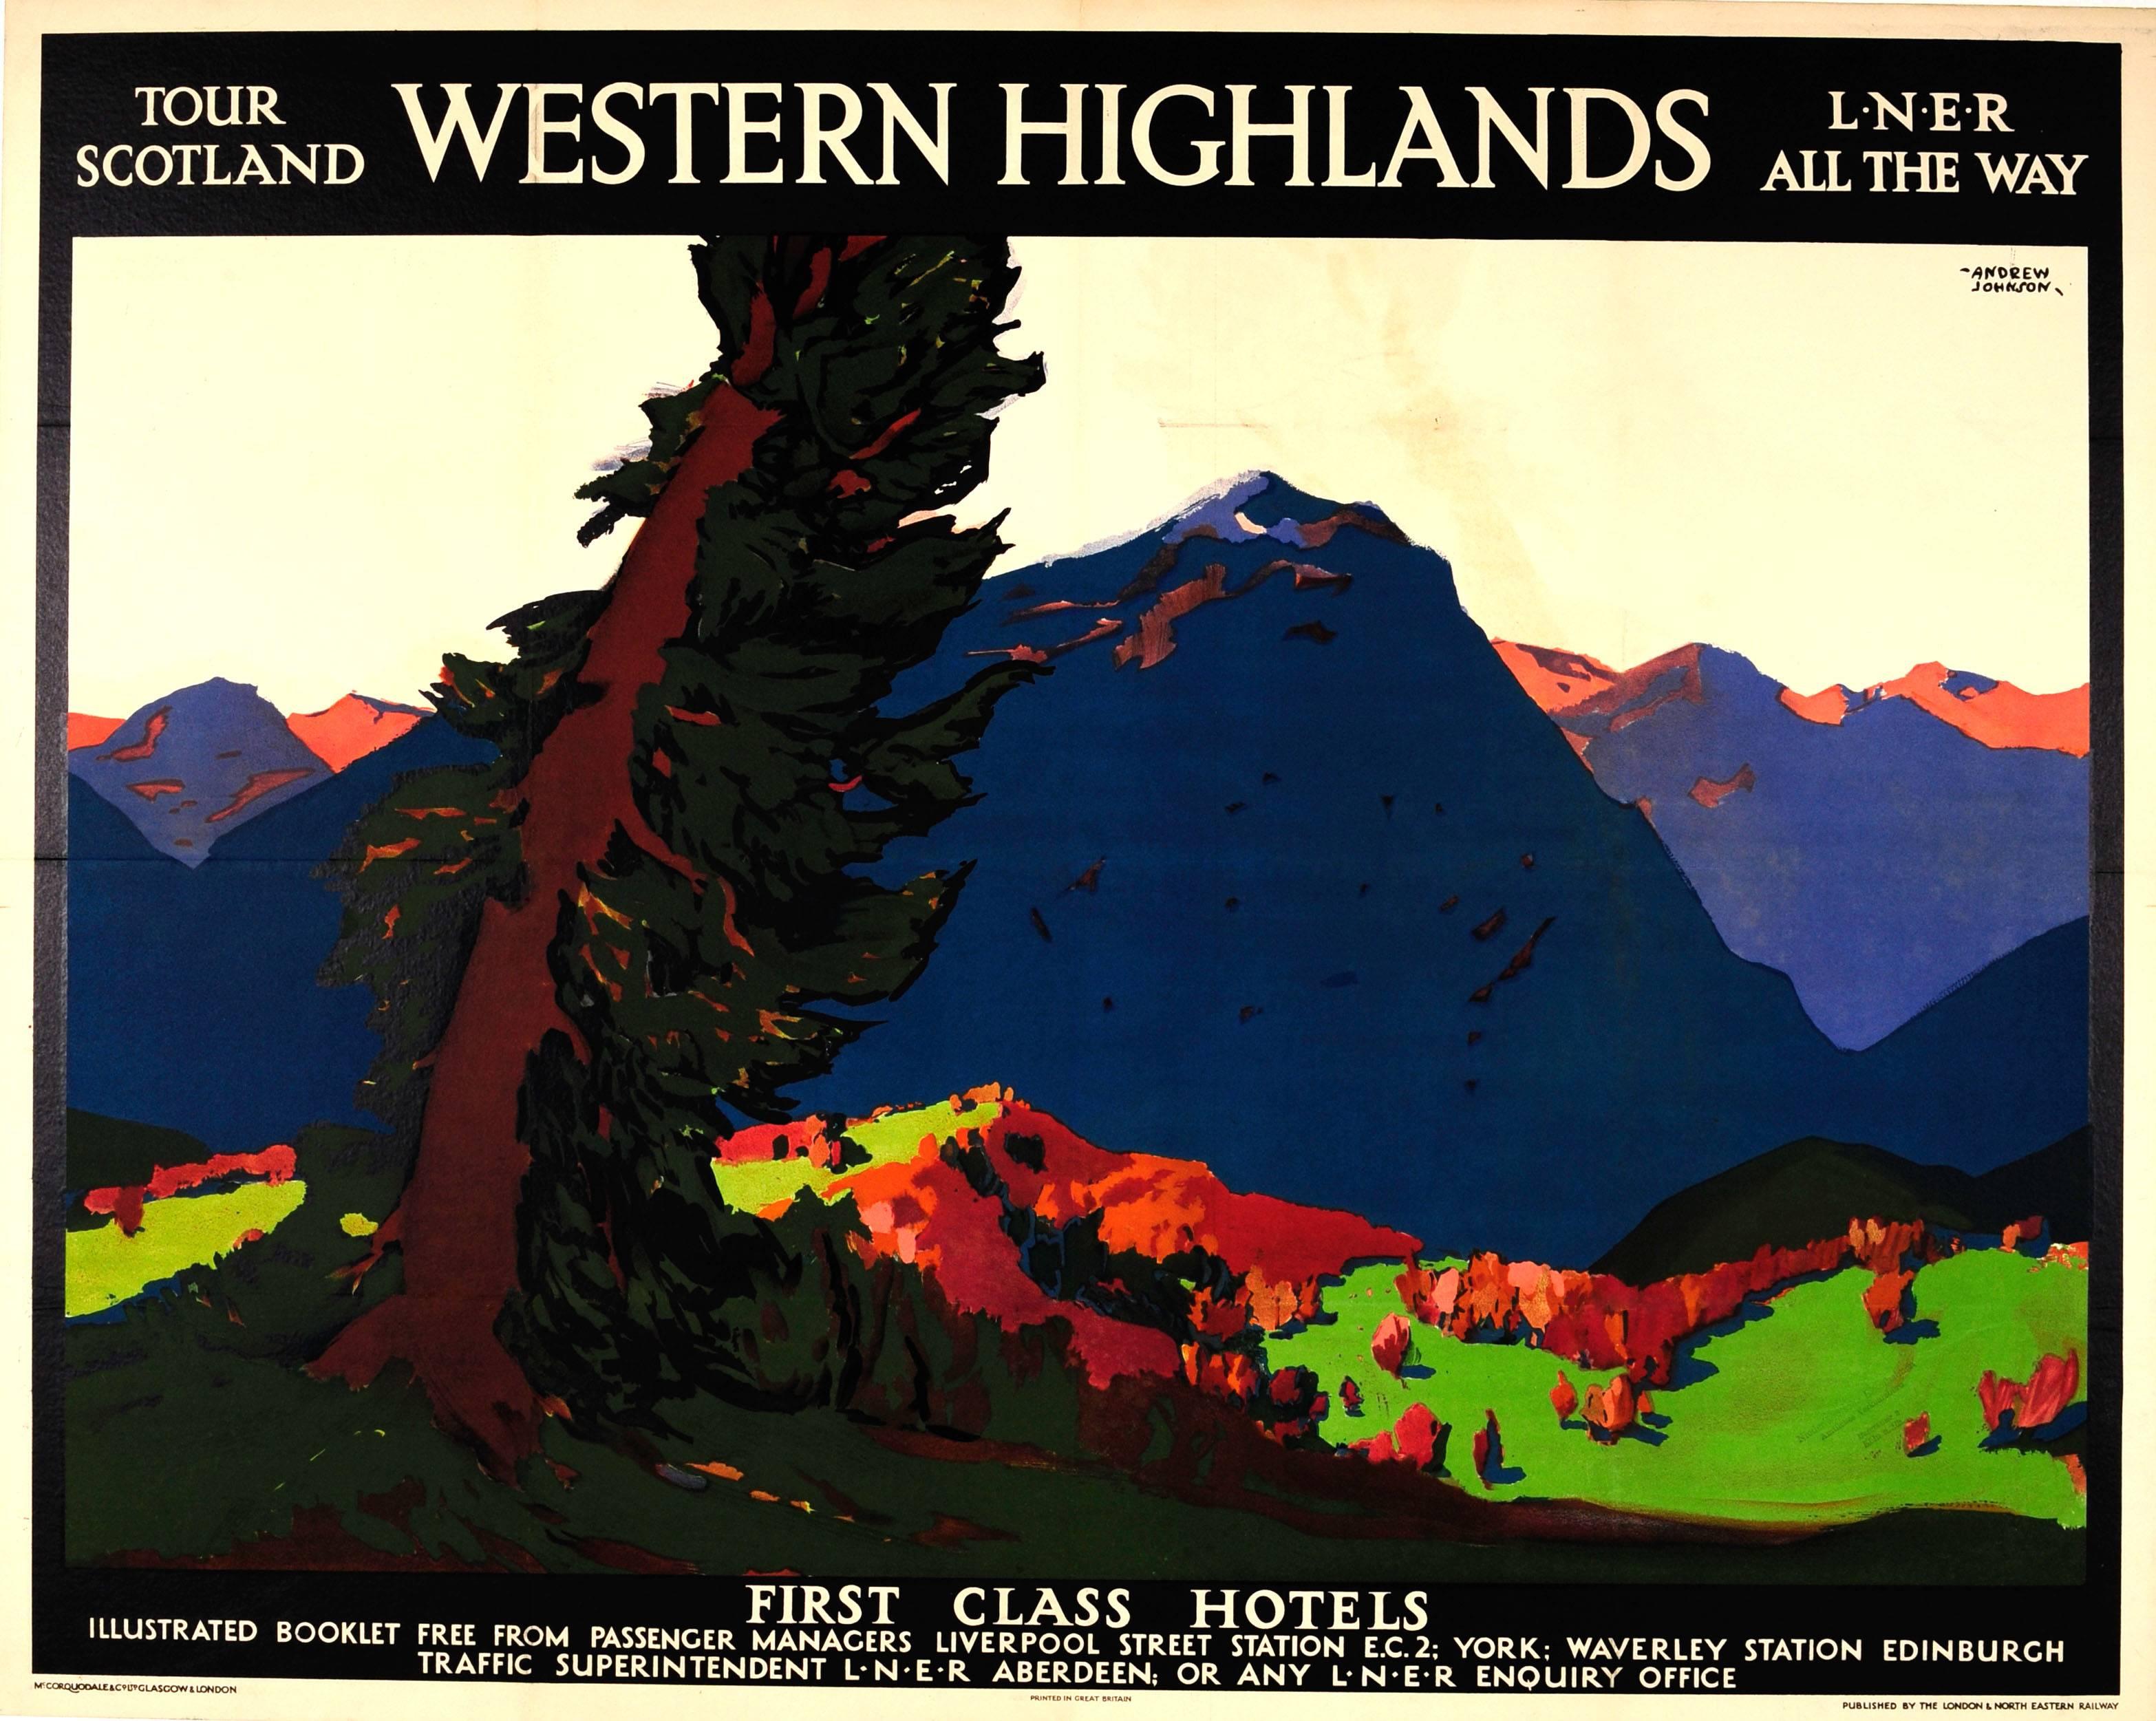 Andrew Johnson Print - Original London & North Eastern Railway LNER Poster - Western Highlands Scotland